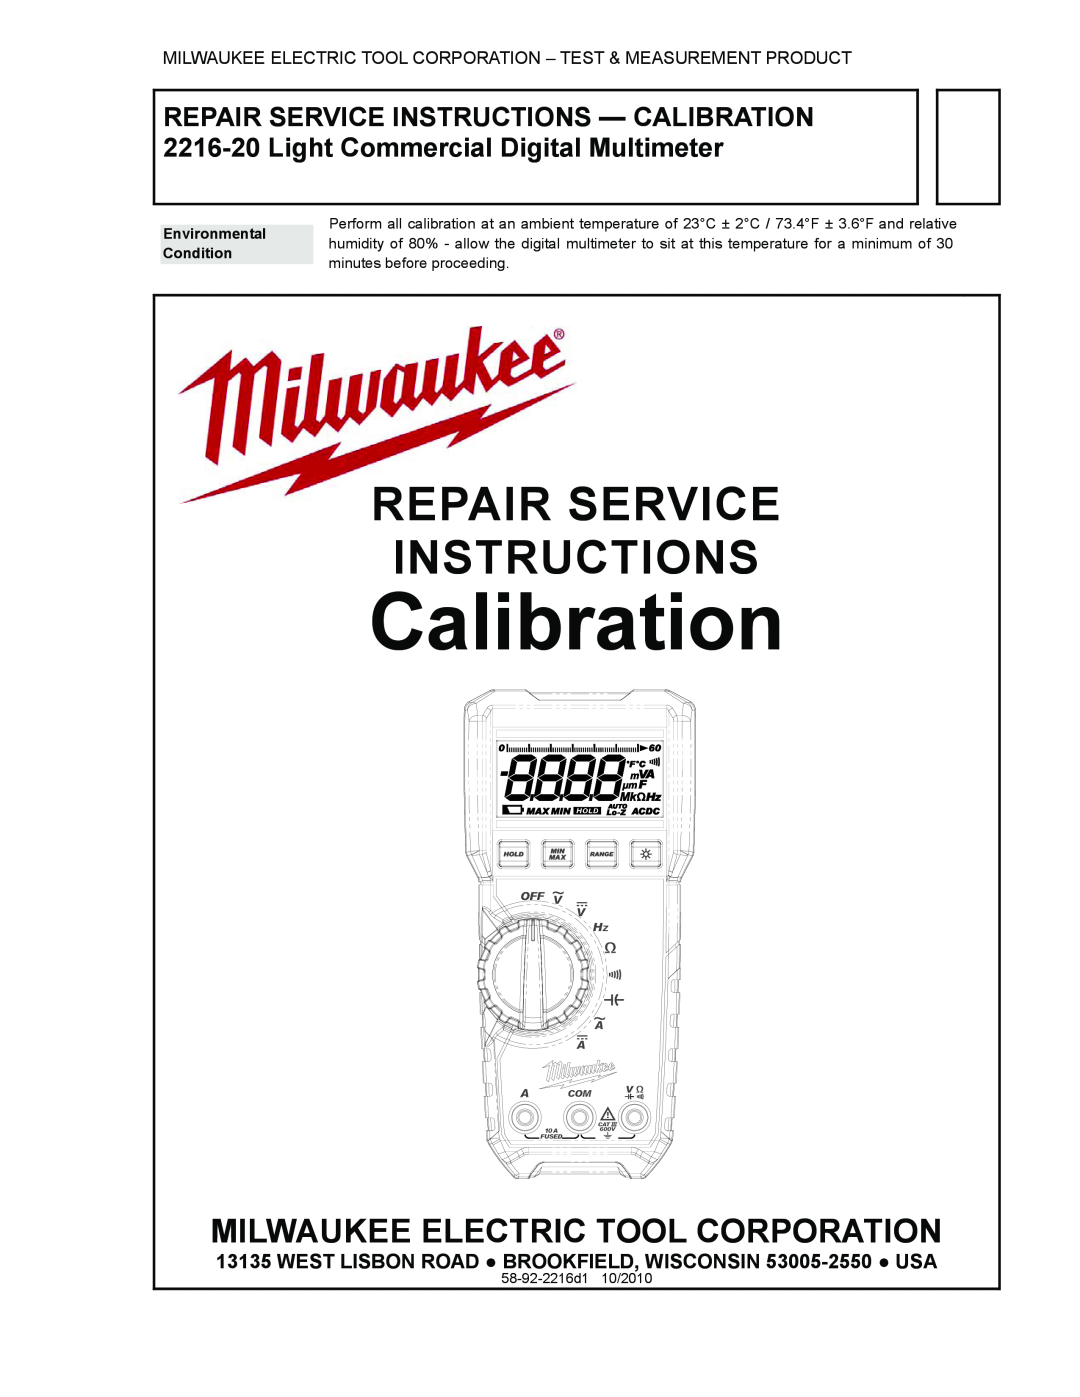 Milwaukee 2216-20 manual Calibration, Repair Service, Instructions, Milwaukee Electric Tool Corporation, Environmental 